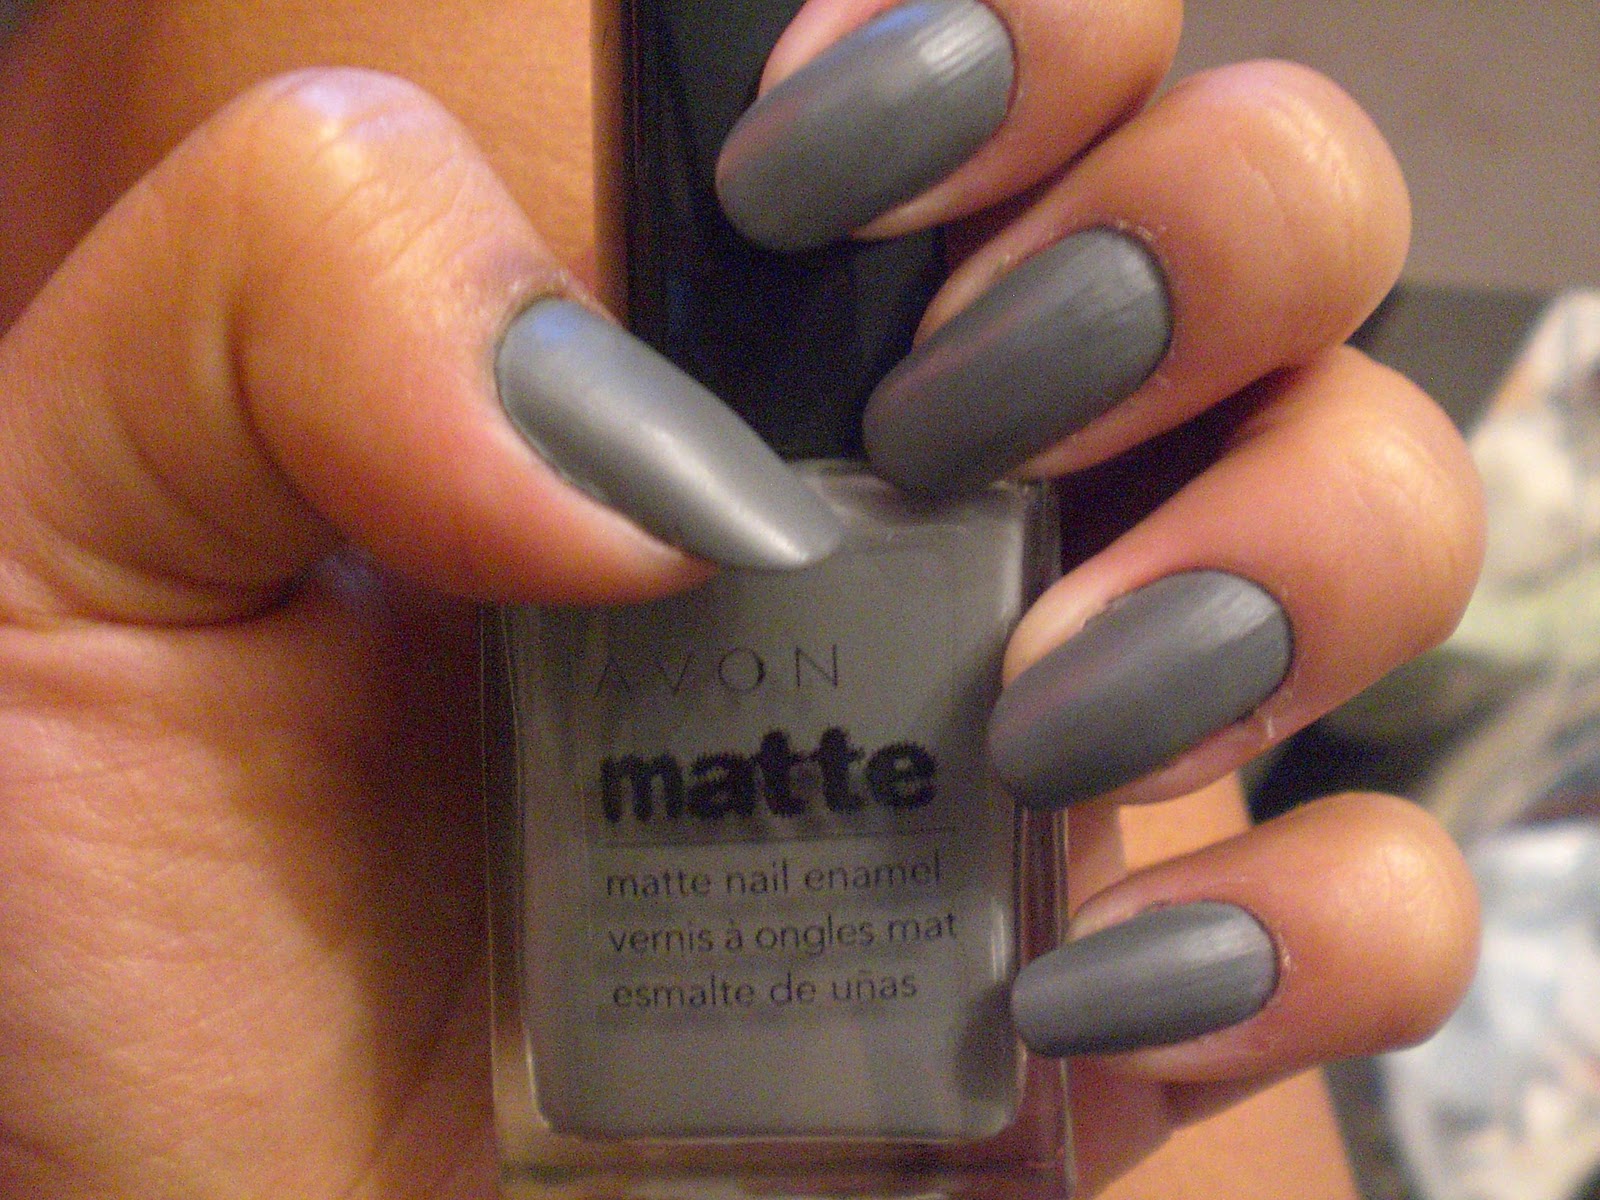 matte color nail polish brand